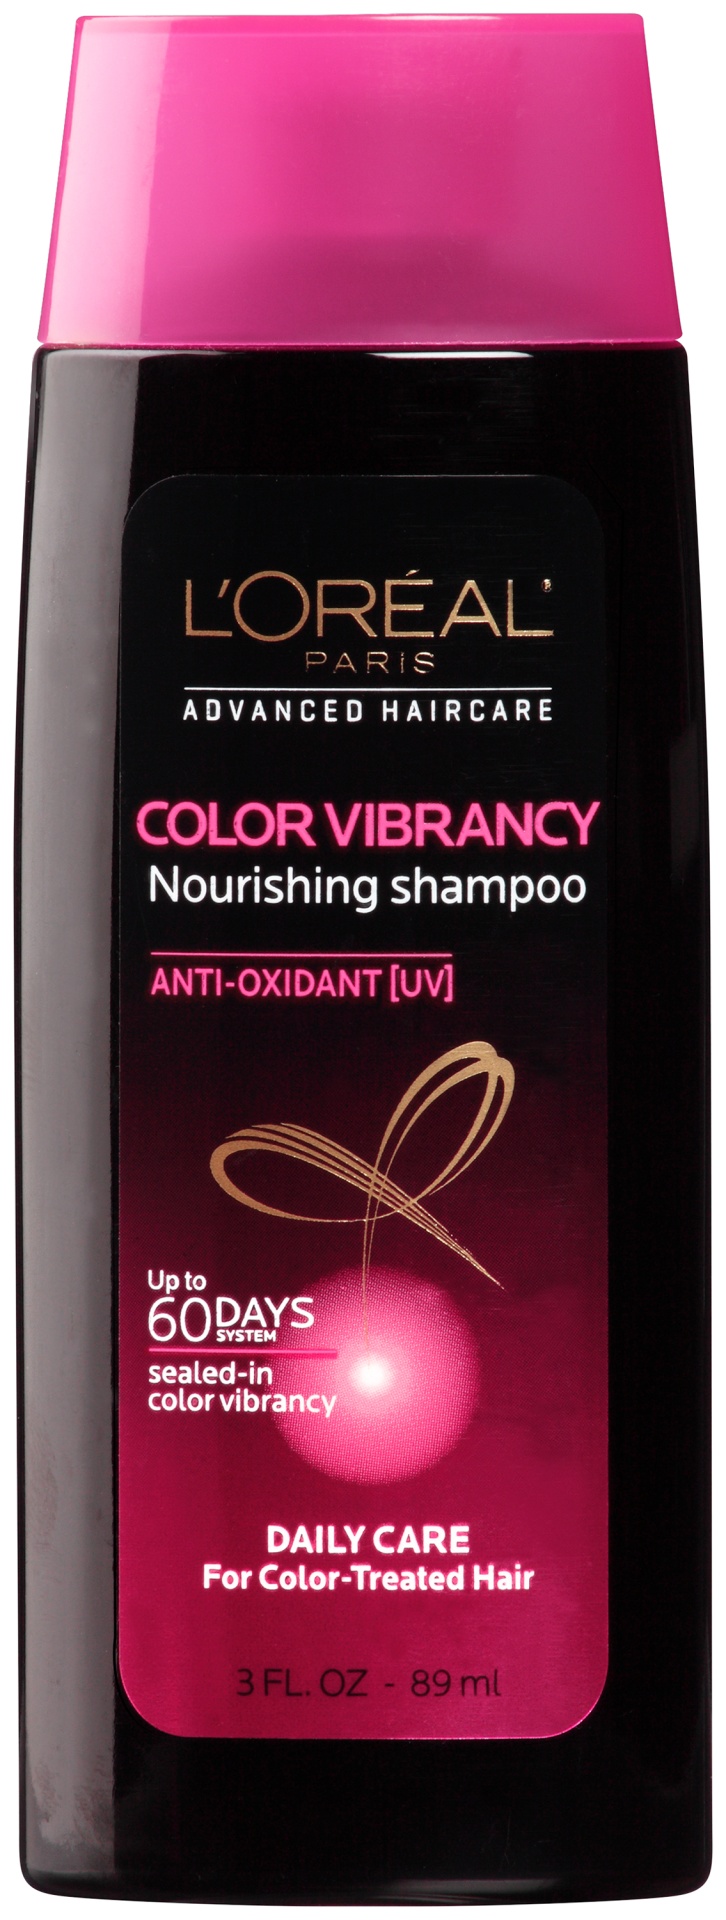 slide 2 of 6, L'Oreal Paris Advanced Haircare Color Vibrancy Shampoo, 3 fl oz